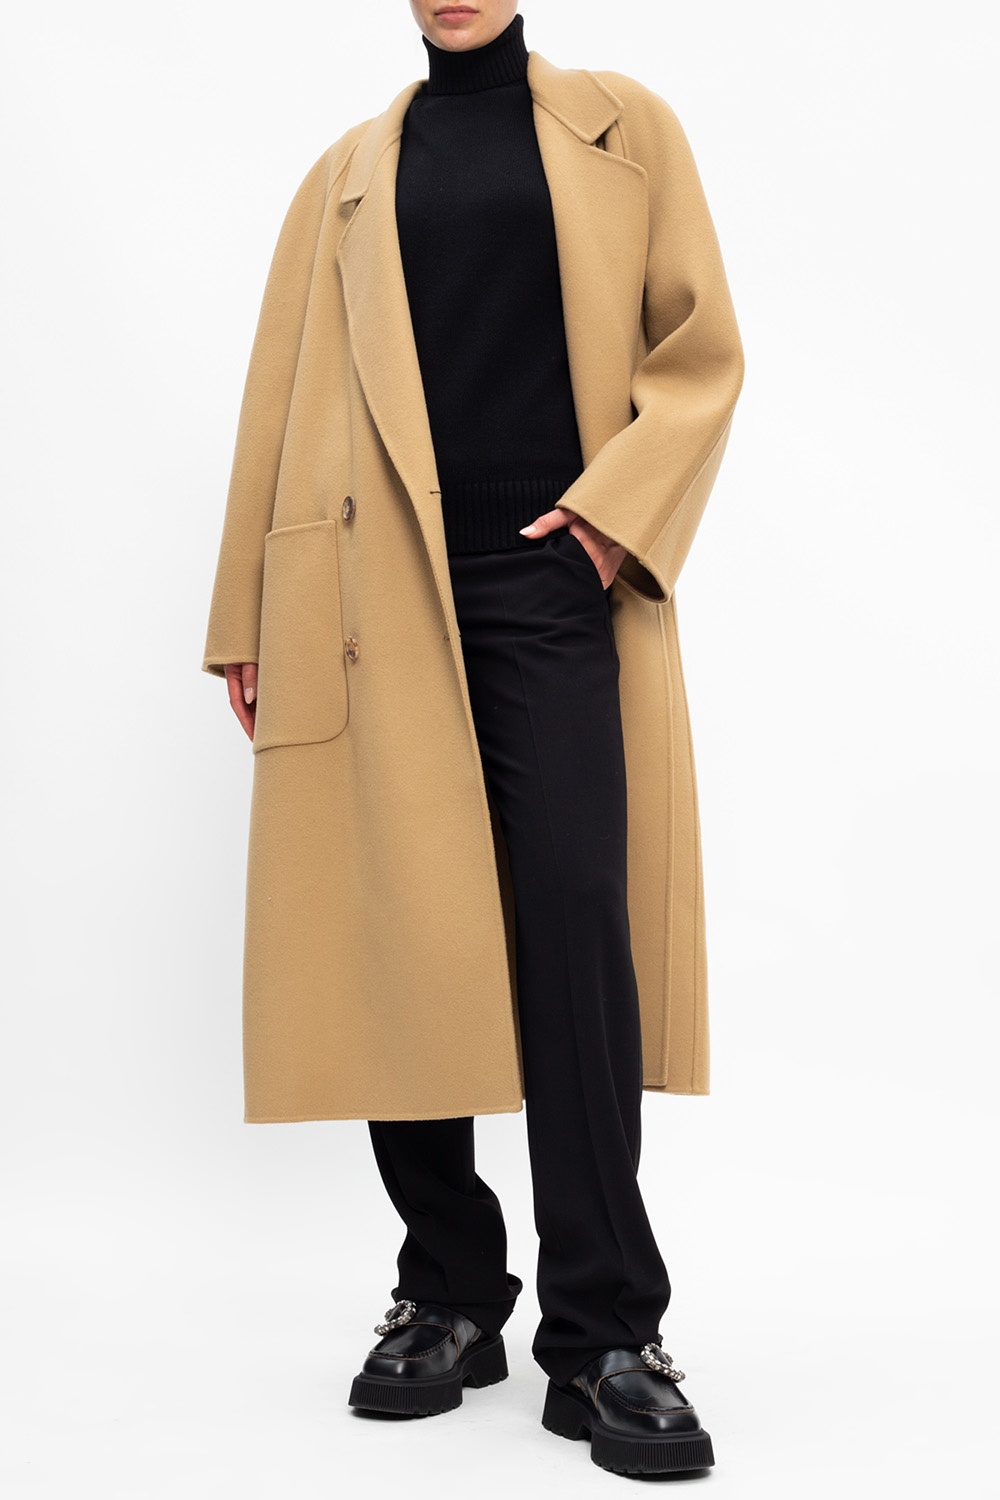 Michael Kors Wool Coat Factory Sale, SAVE 53%.